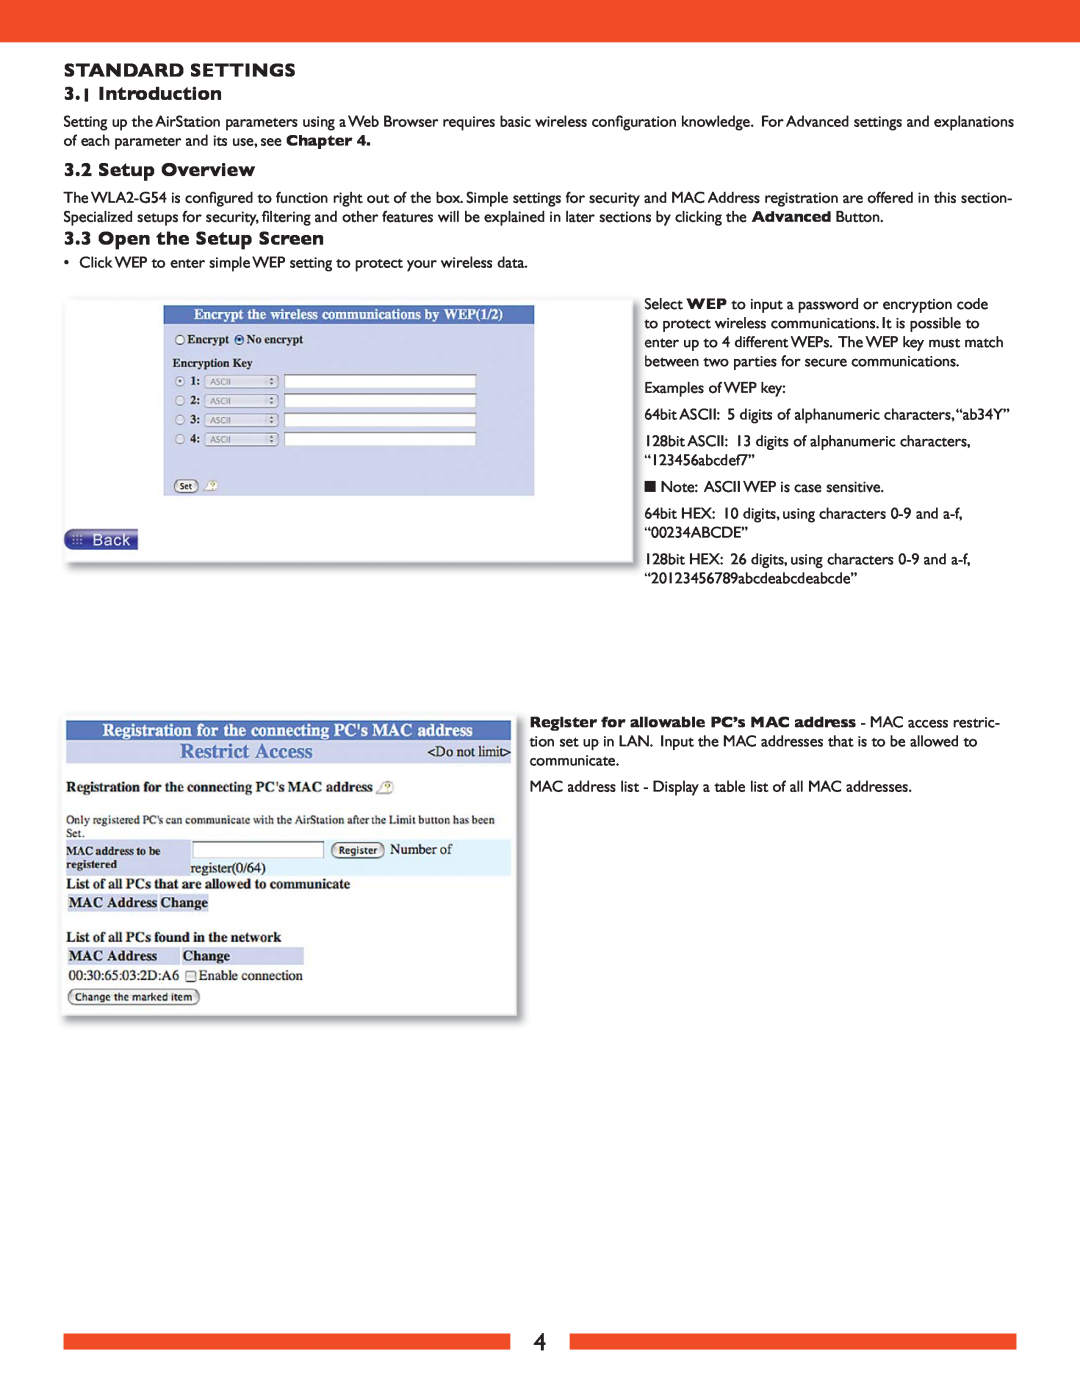 Buffalo Technology WLA2-G54 user manual STANDARD SETTINGS 3.1 Introduction, Setup Overview, Open the Setup Screen 